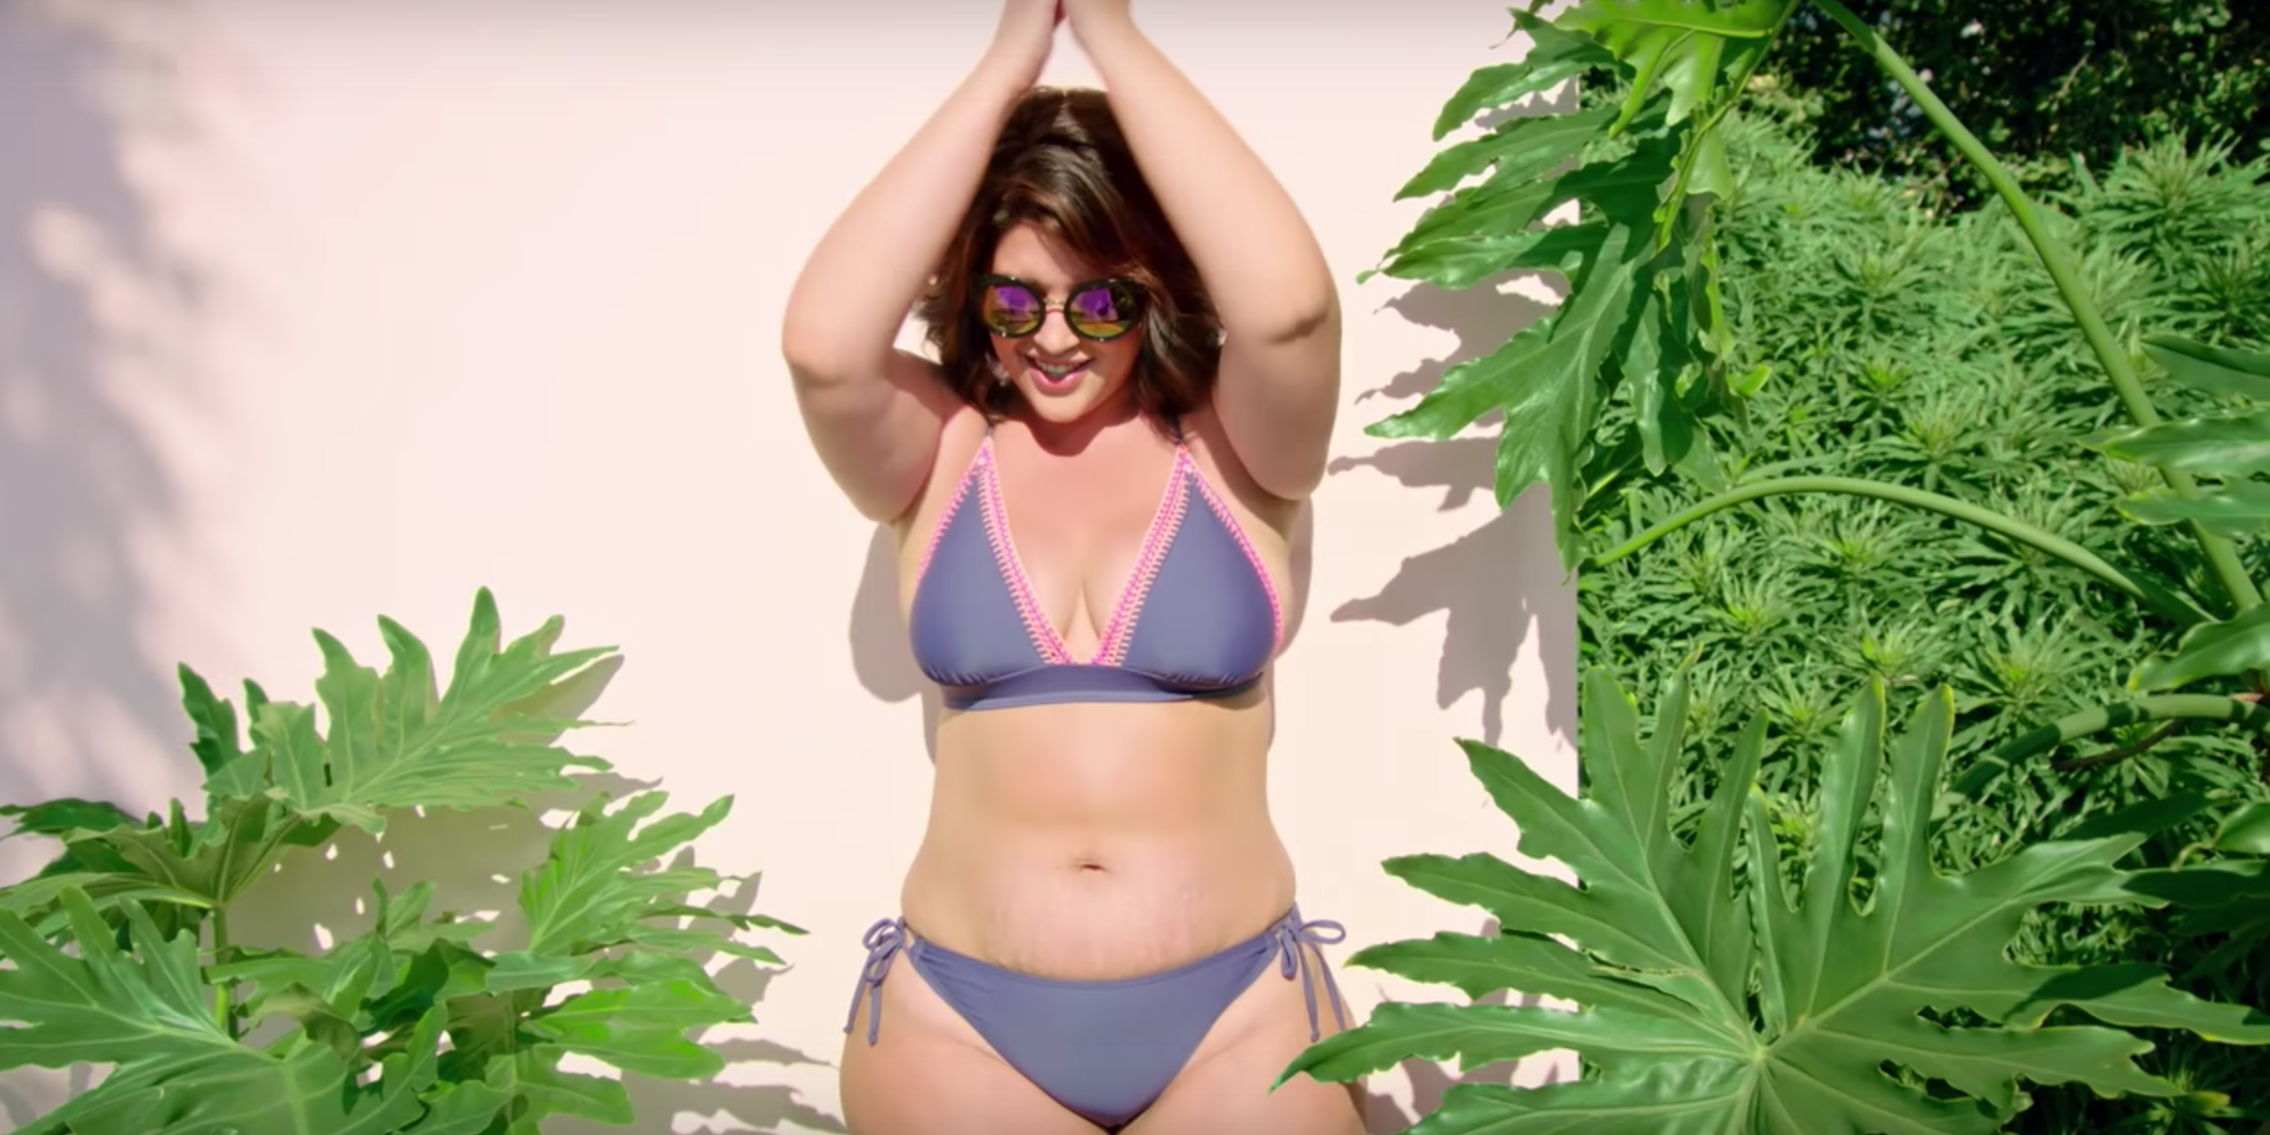 Target body-inclusive swimwear ads